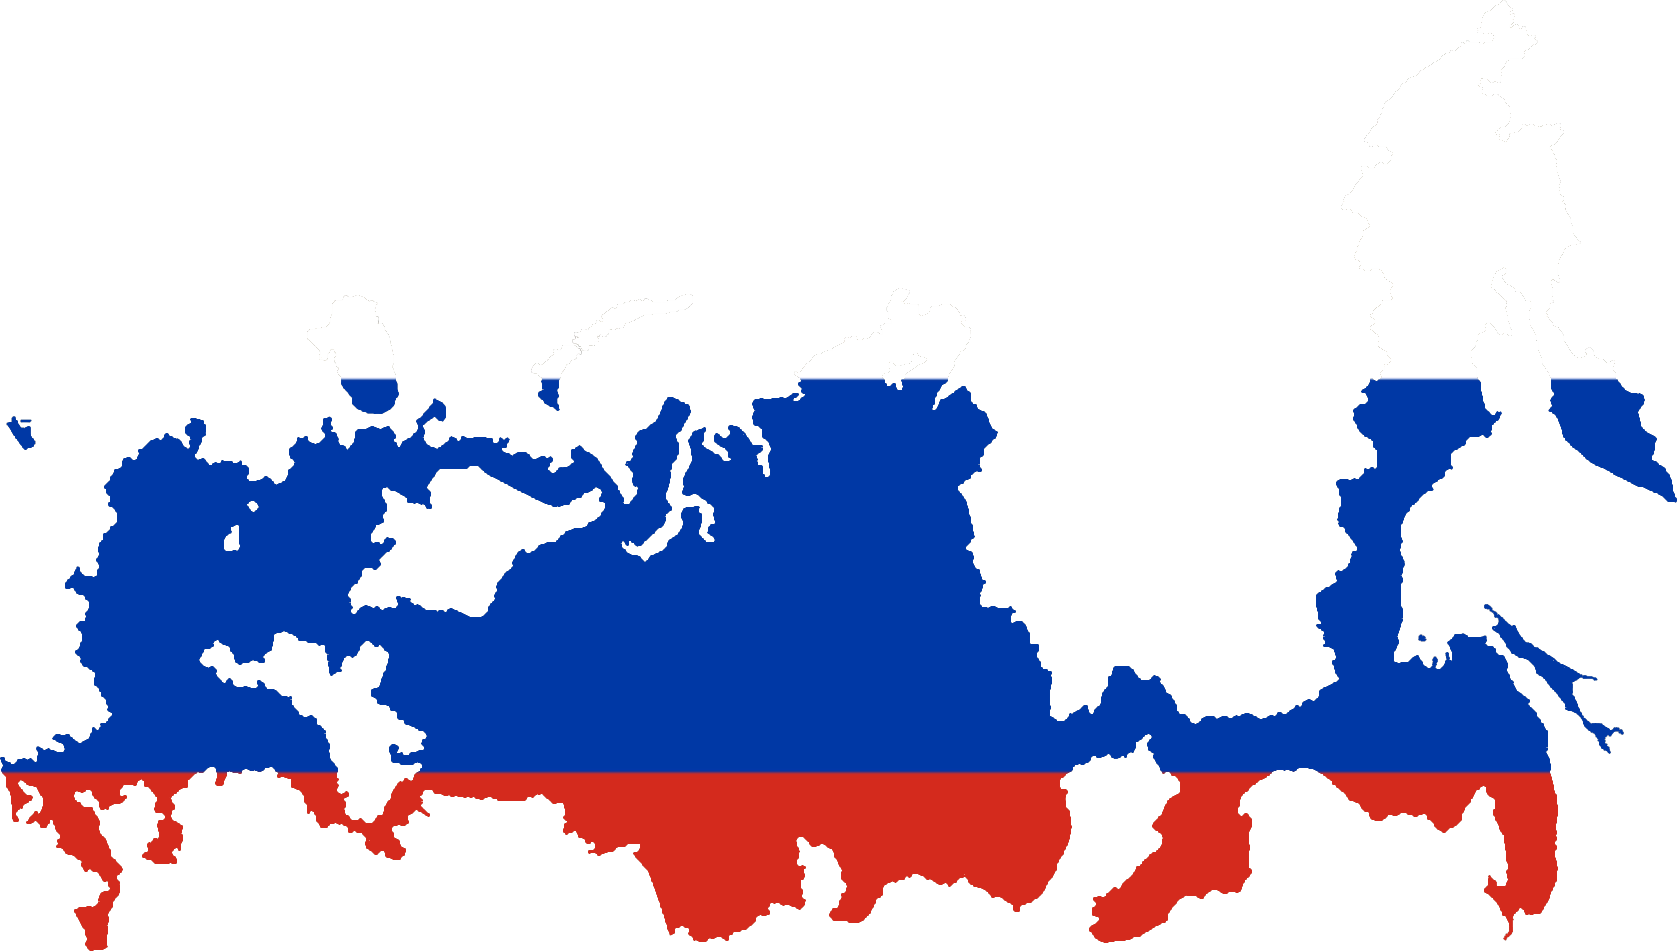 Russia with Ukraine flag map by GeorgianPatriot on DeviantArt